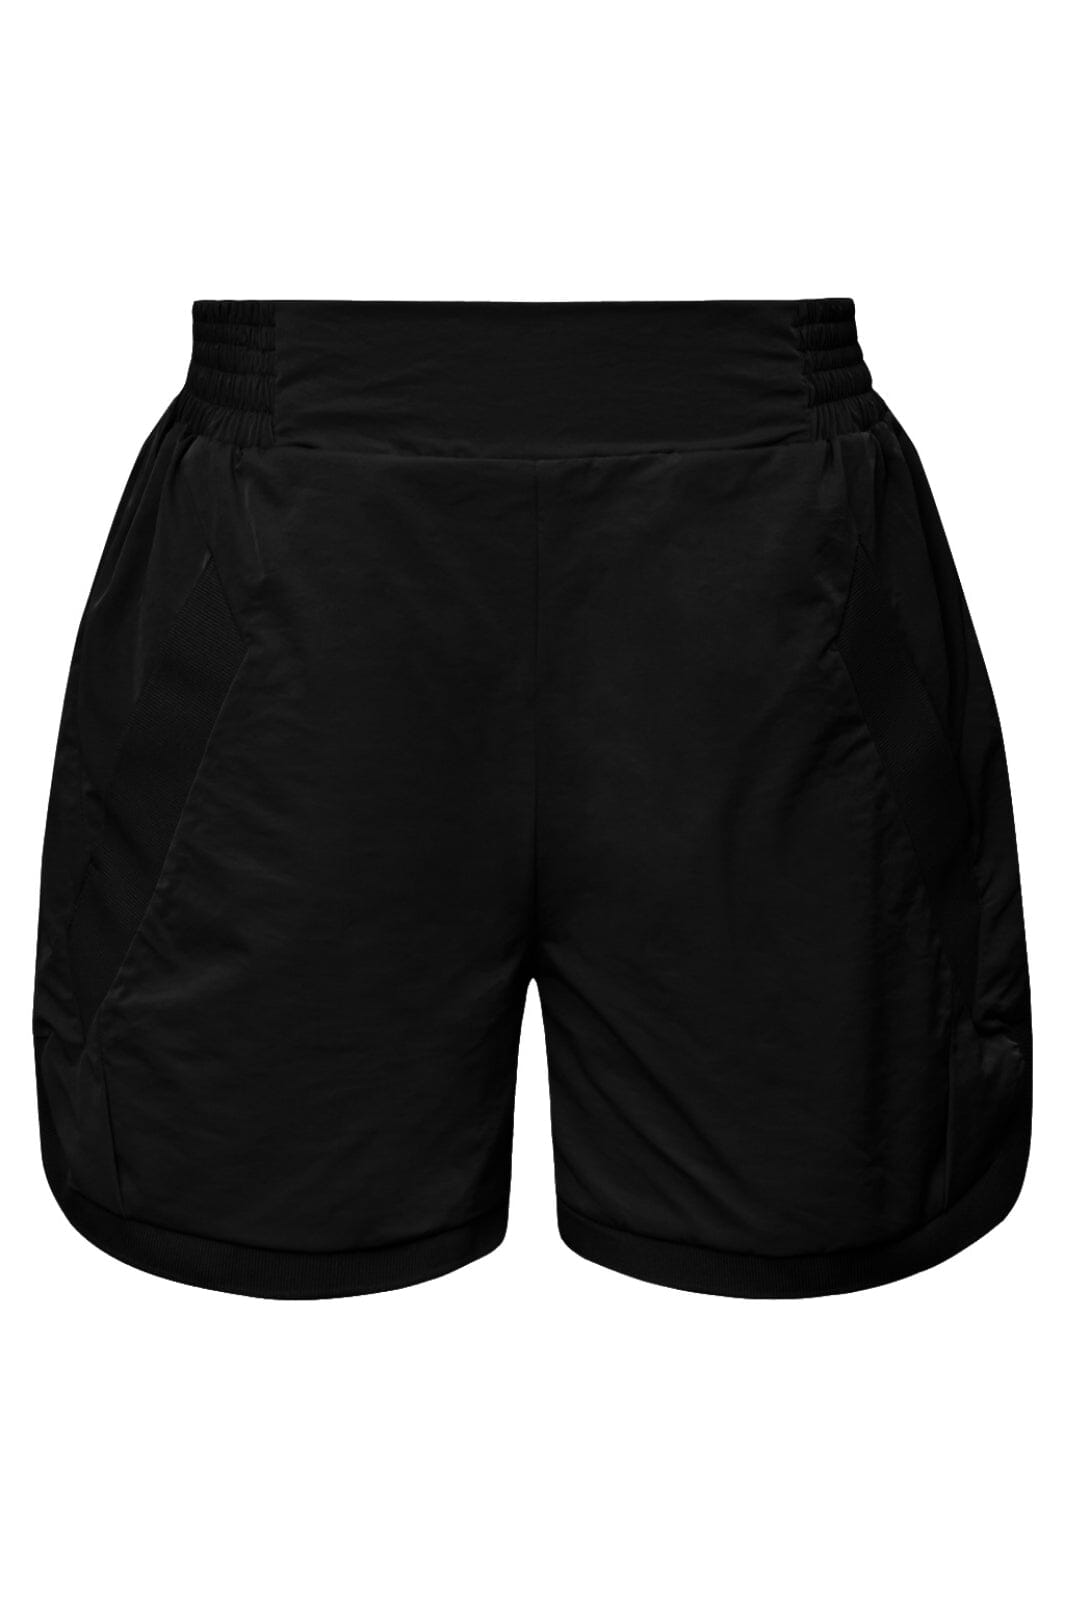 Gossia - Anikigo Shorts - Black Shorts 